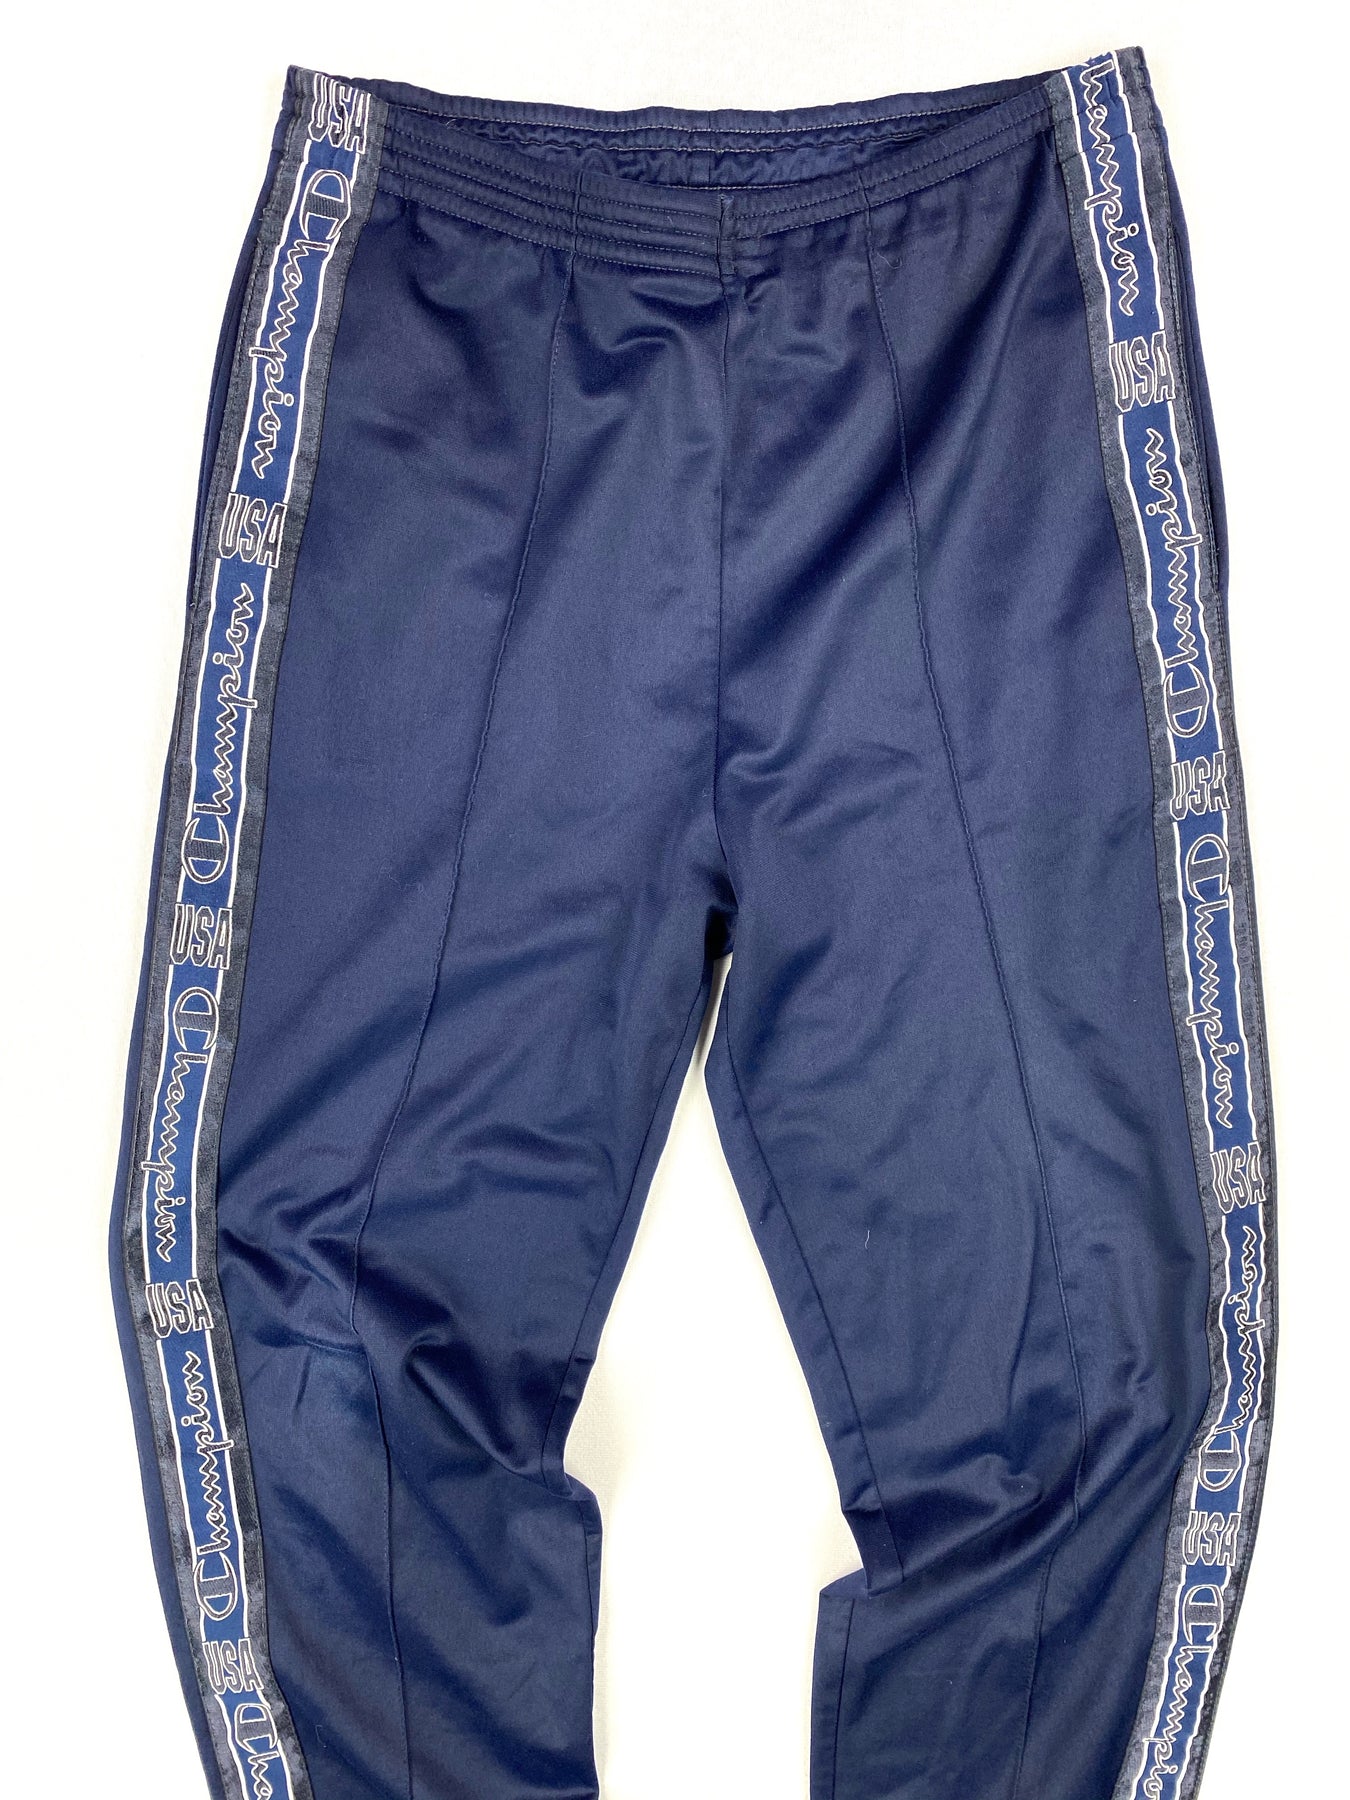 Vintage Champion Track Pants 